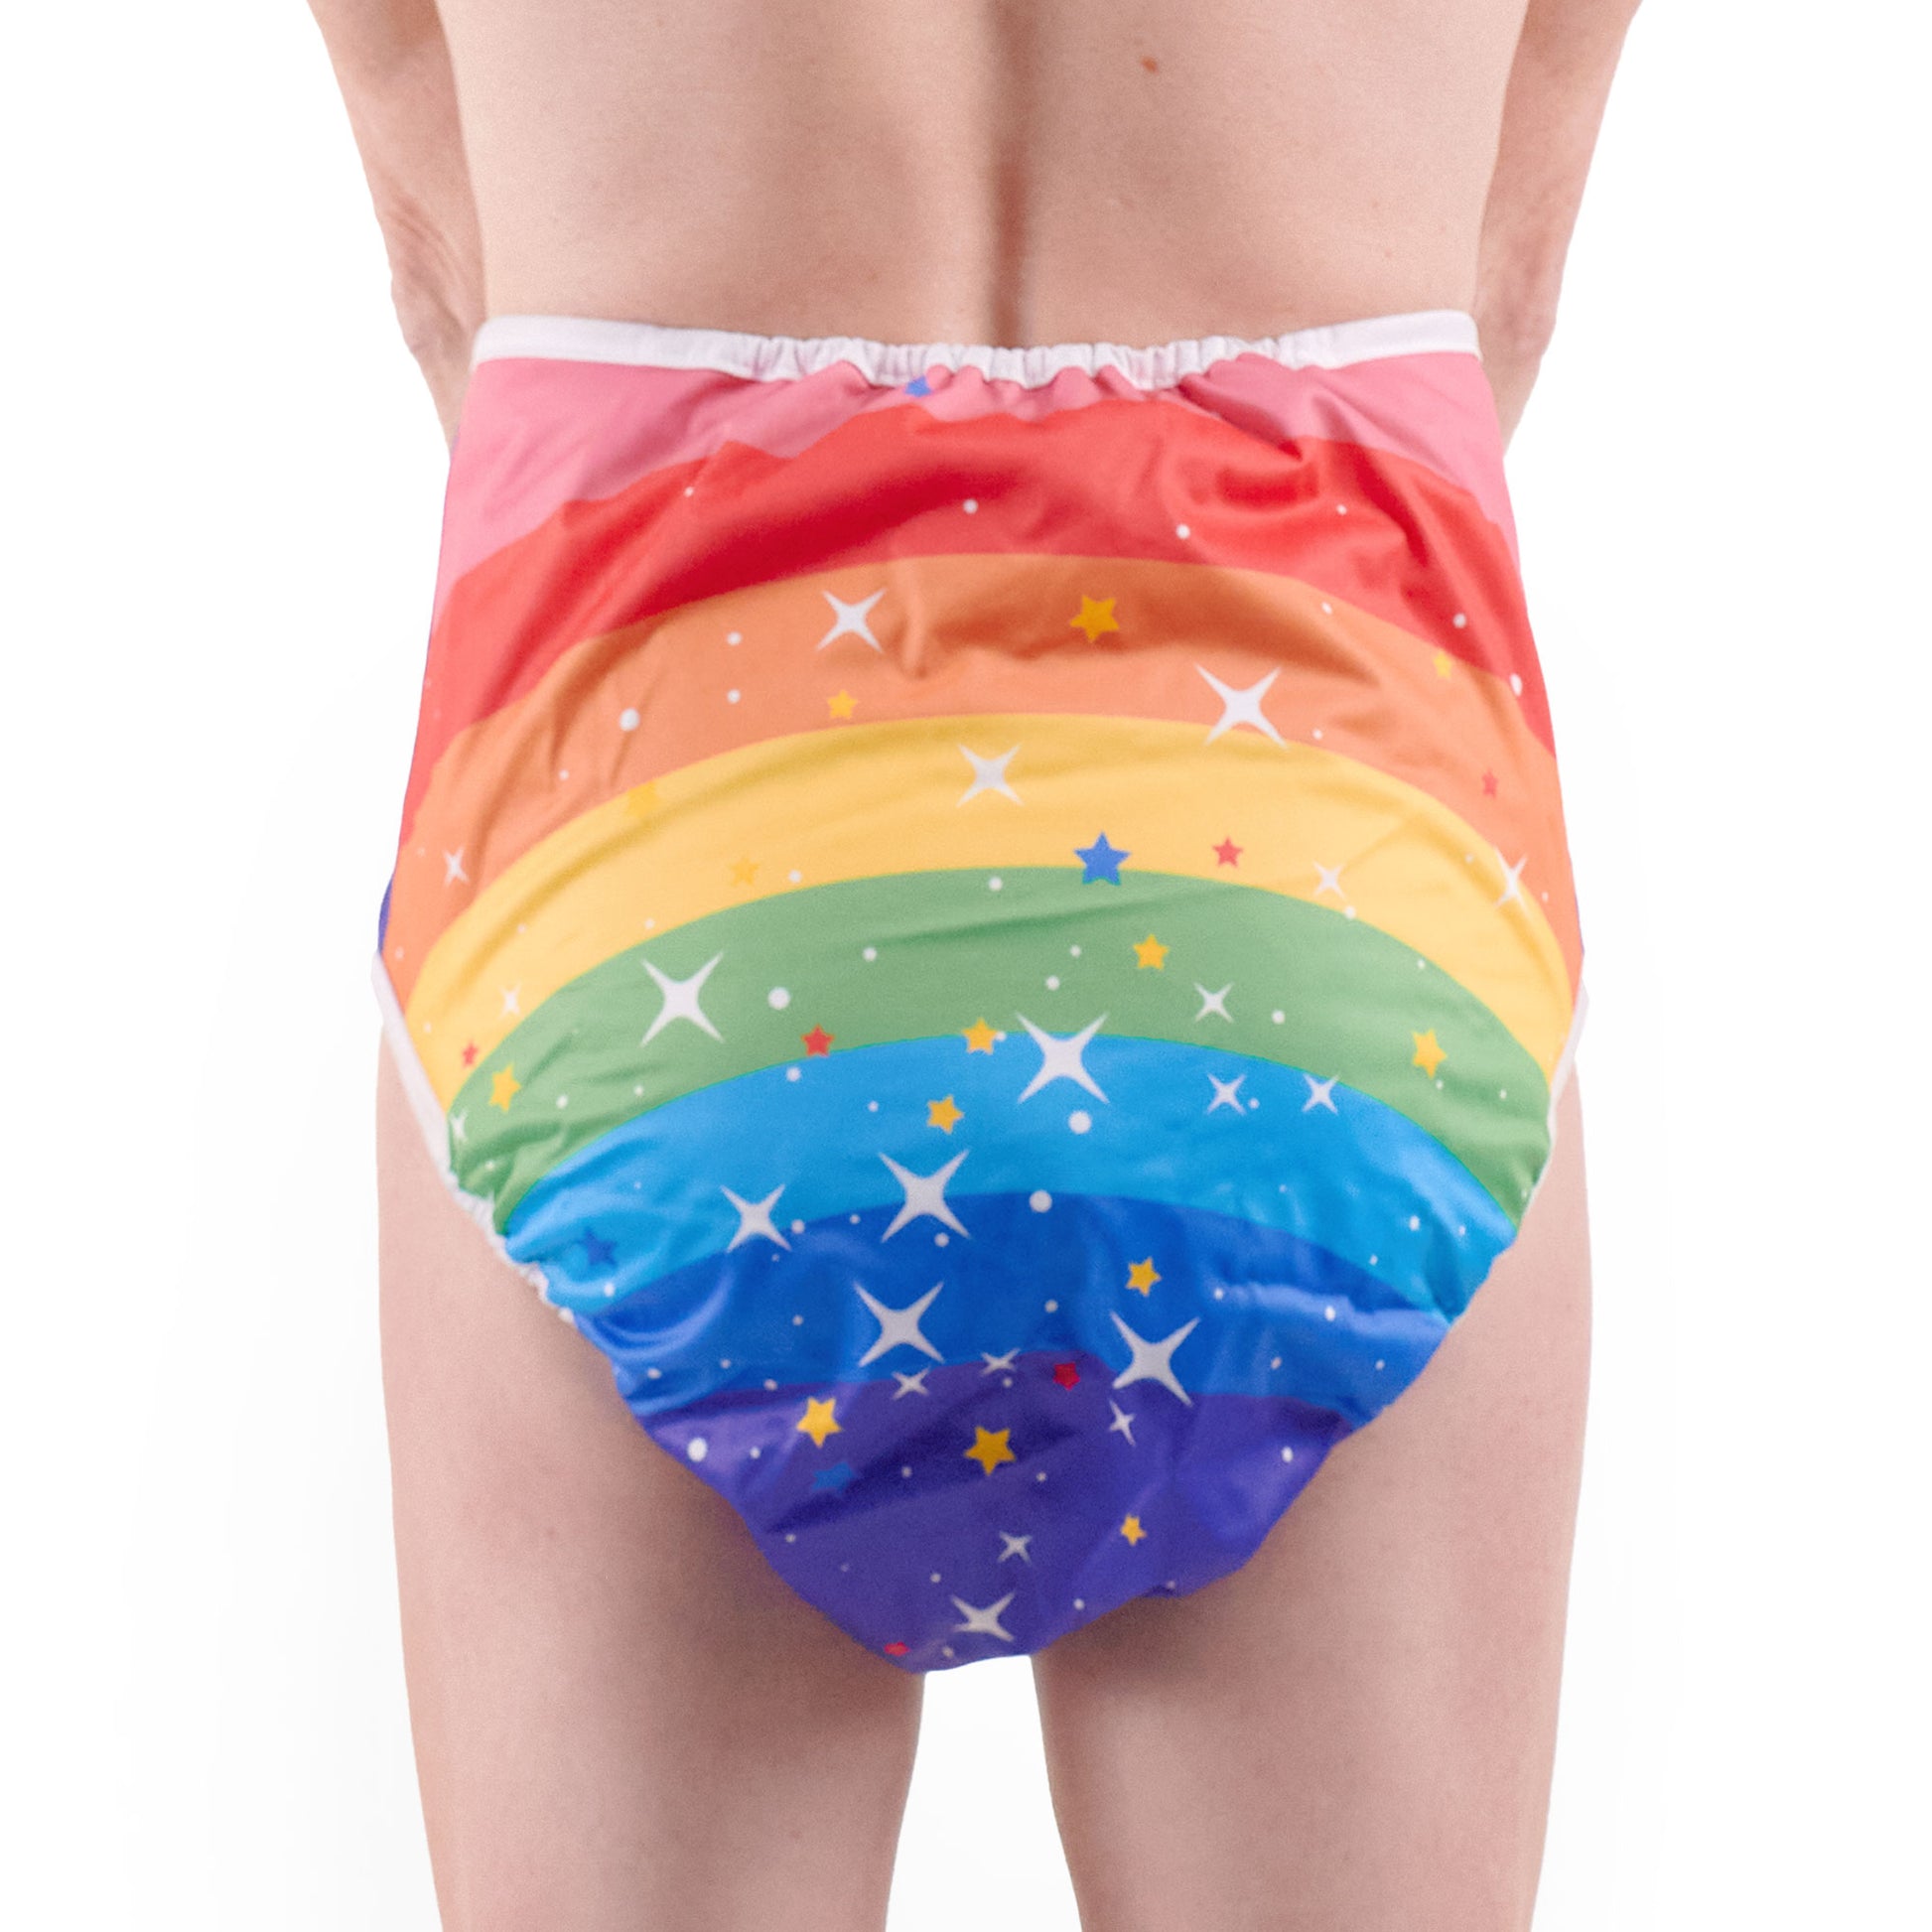 Rearz - Adult Diaper Cover/Wrap - Rainbow Star –